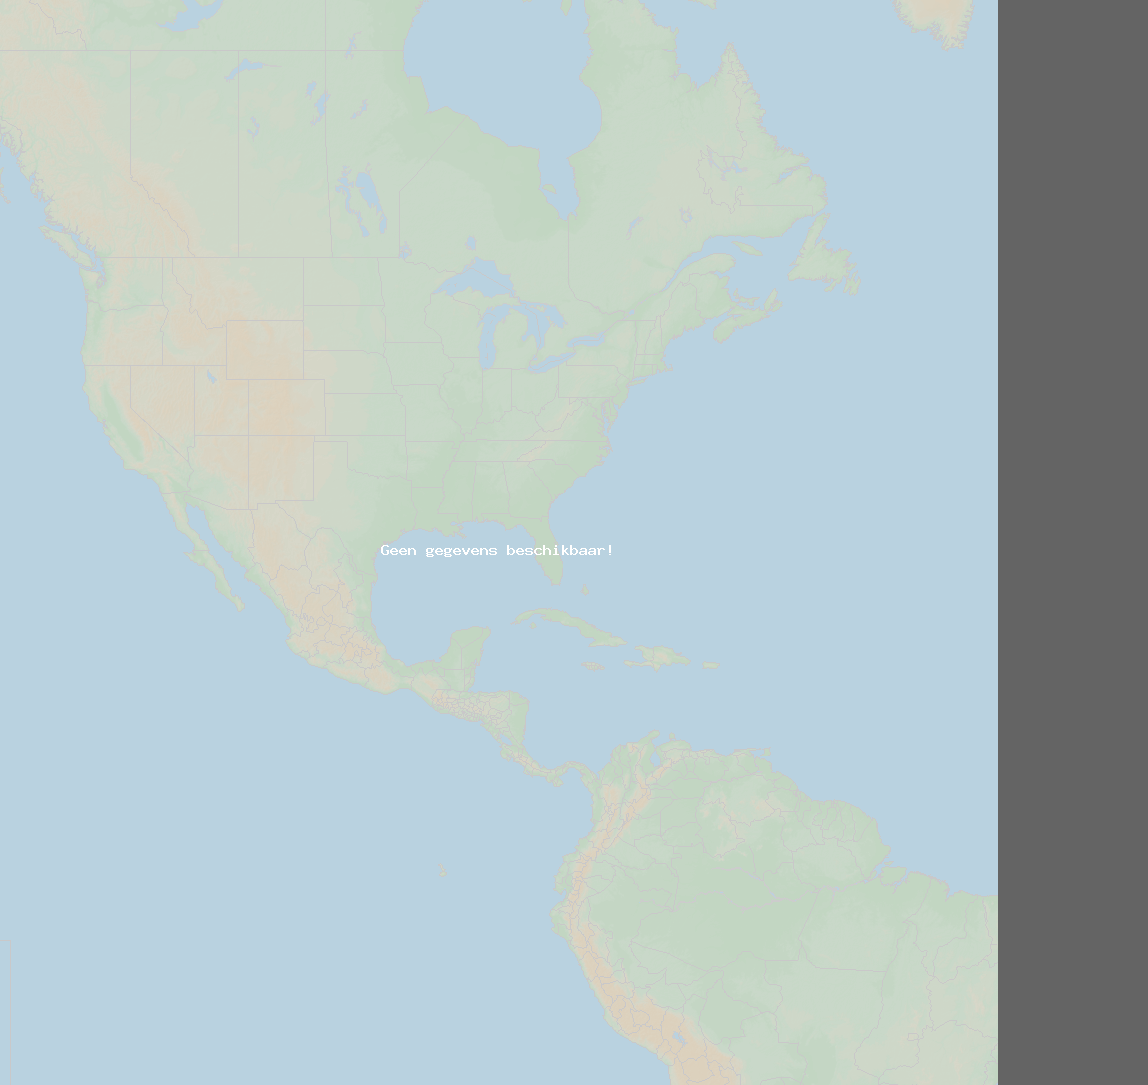 Inslagverhouding (Station Lake Katrine) North America 2021 